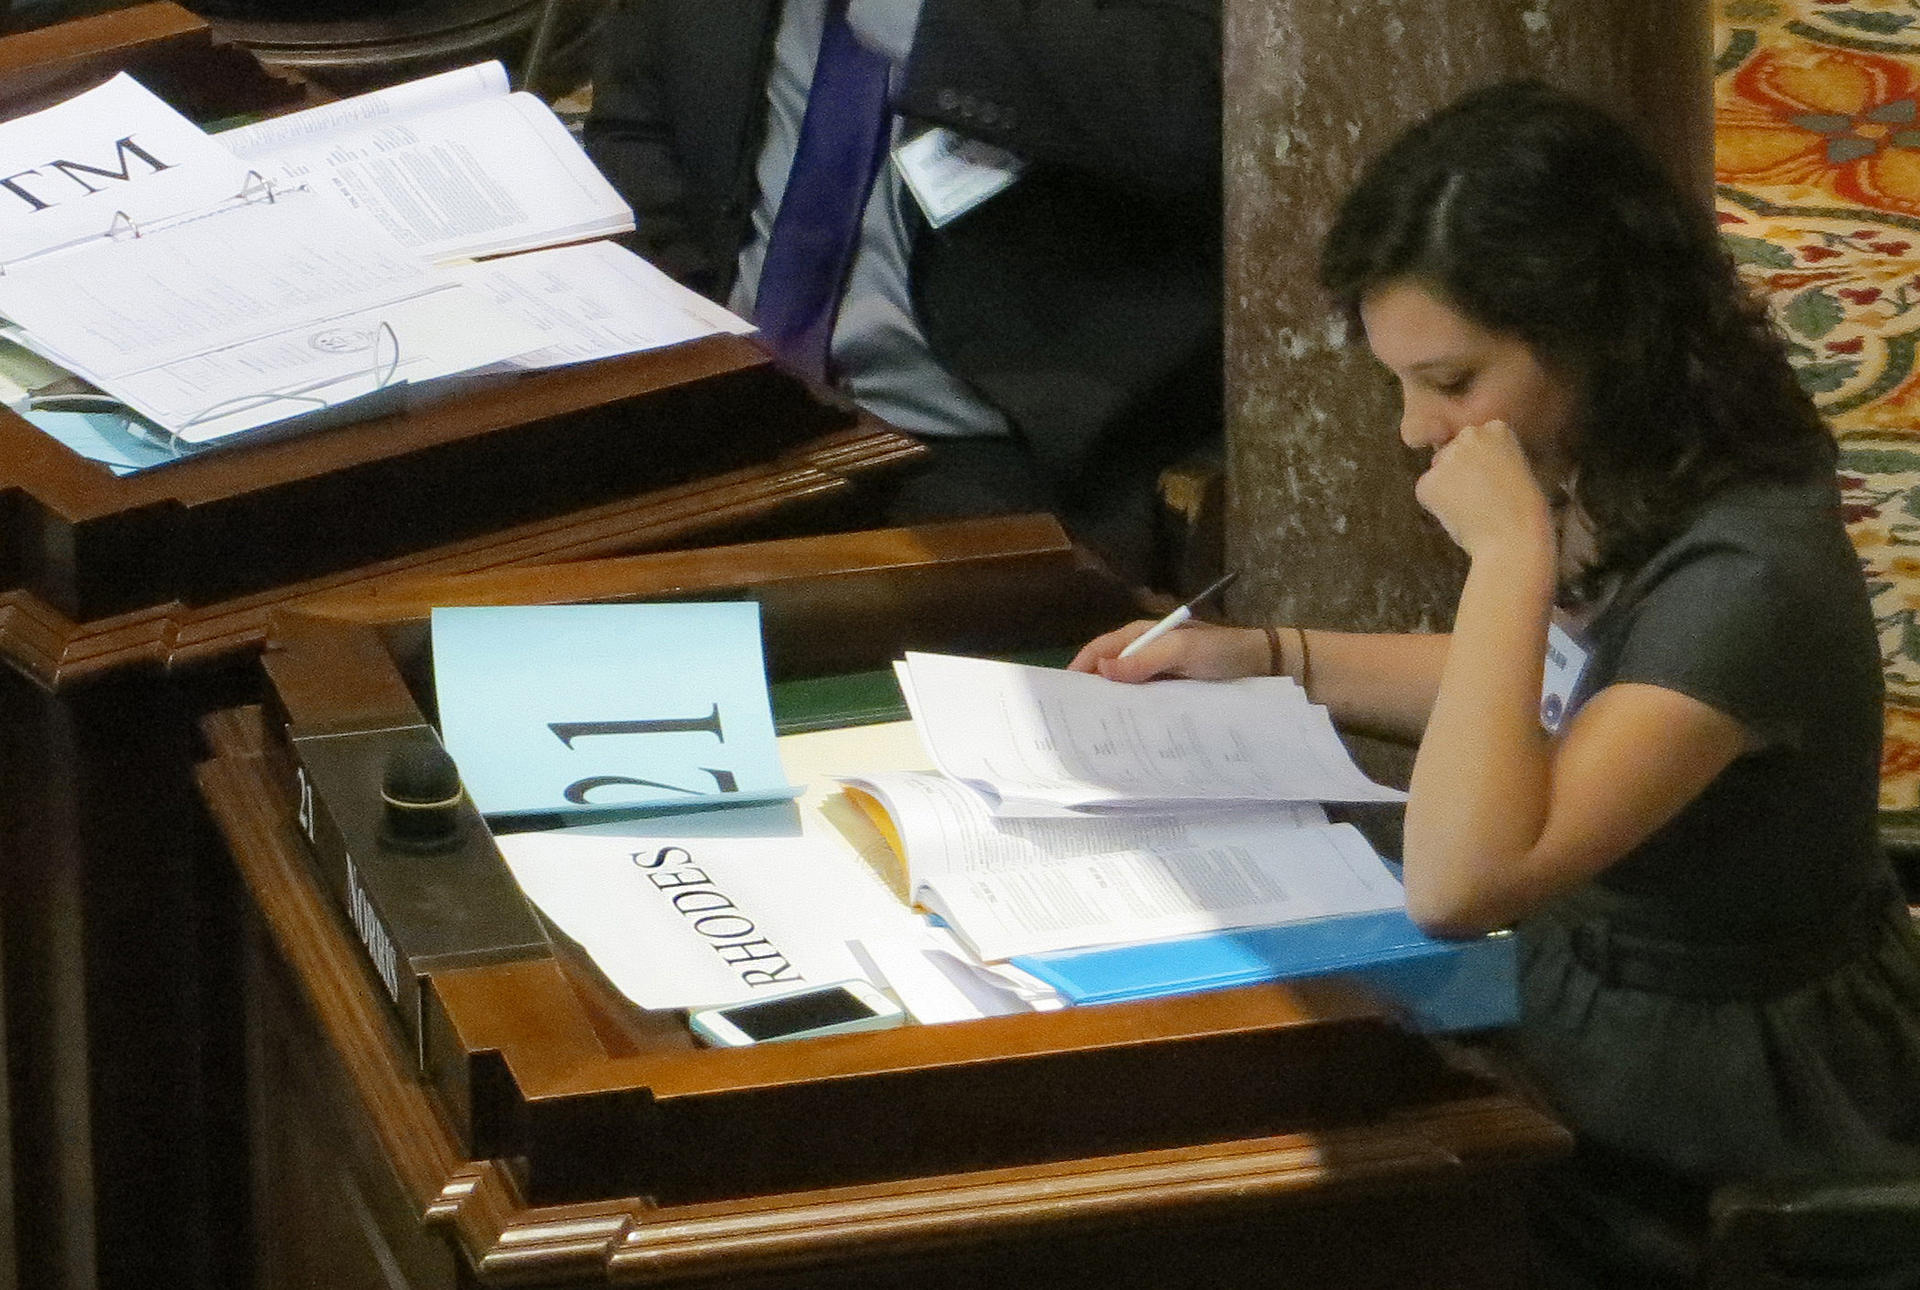 a female student studies legislative papers at a desk